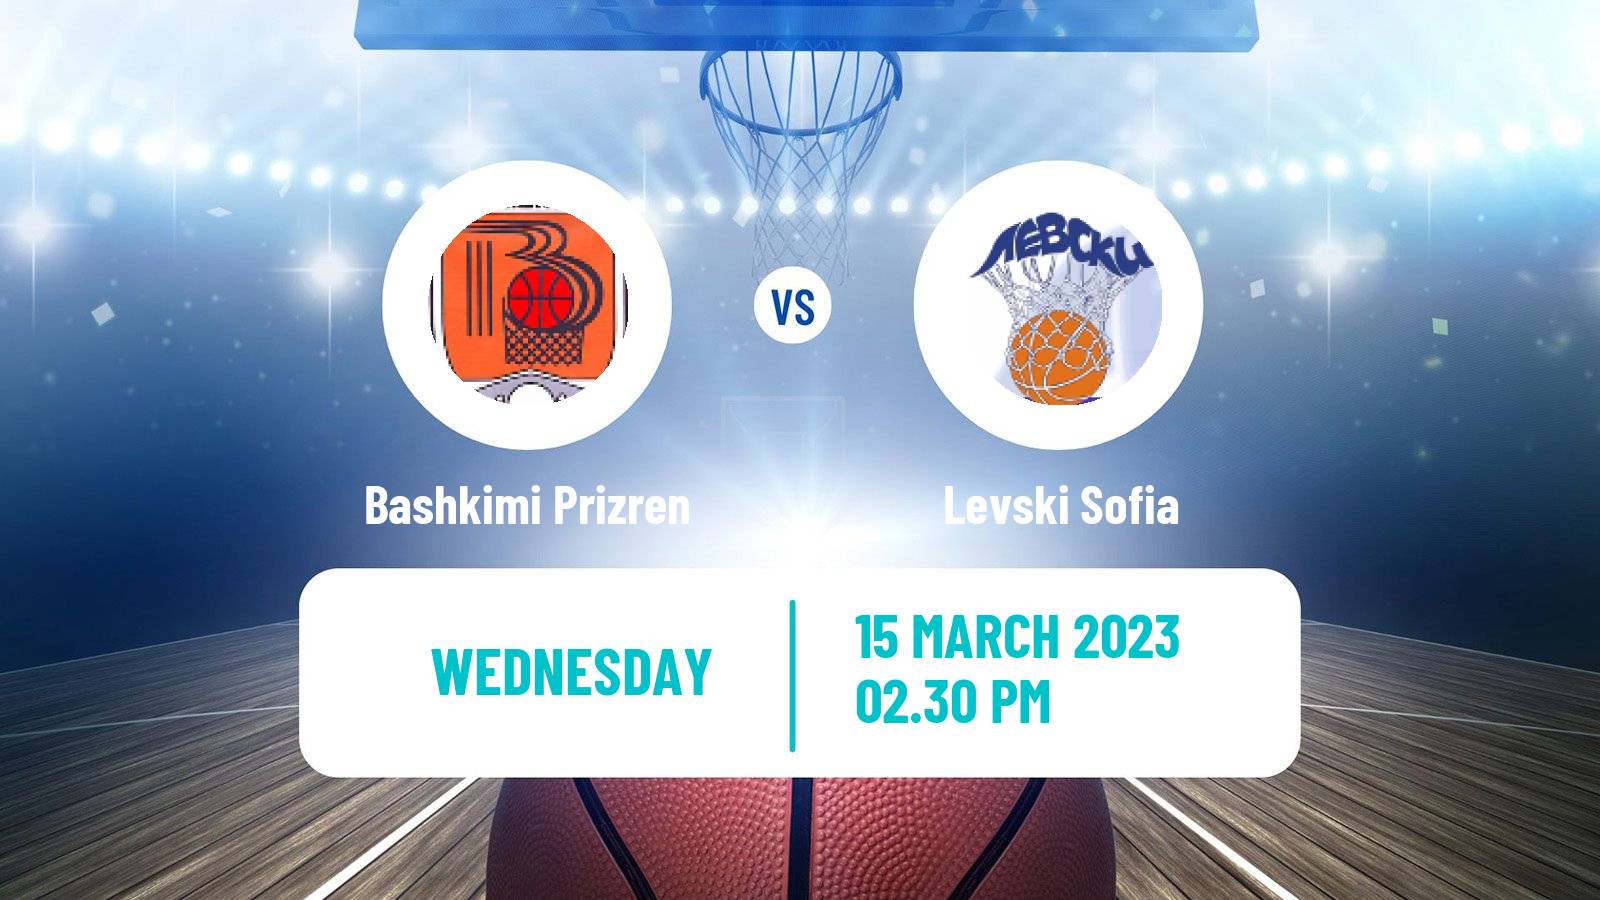 Basketball Balkan International Basketball League Bashkimi Prizren - Levski Sofia